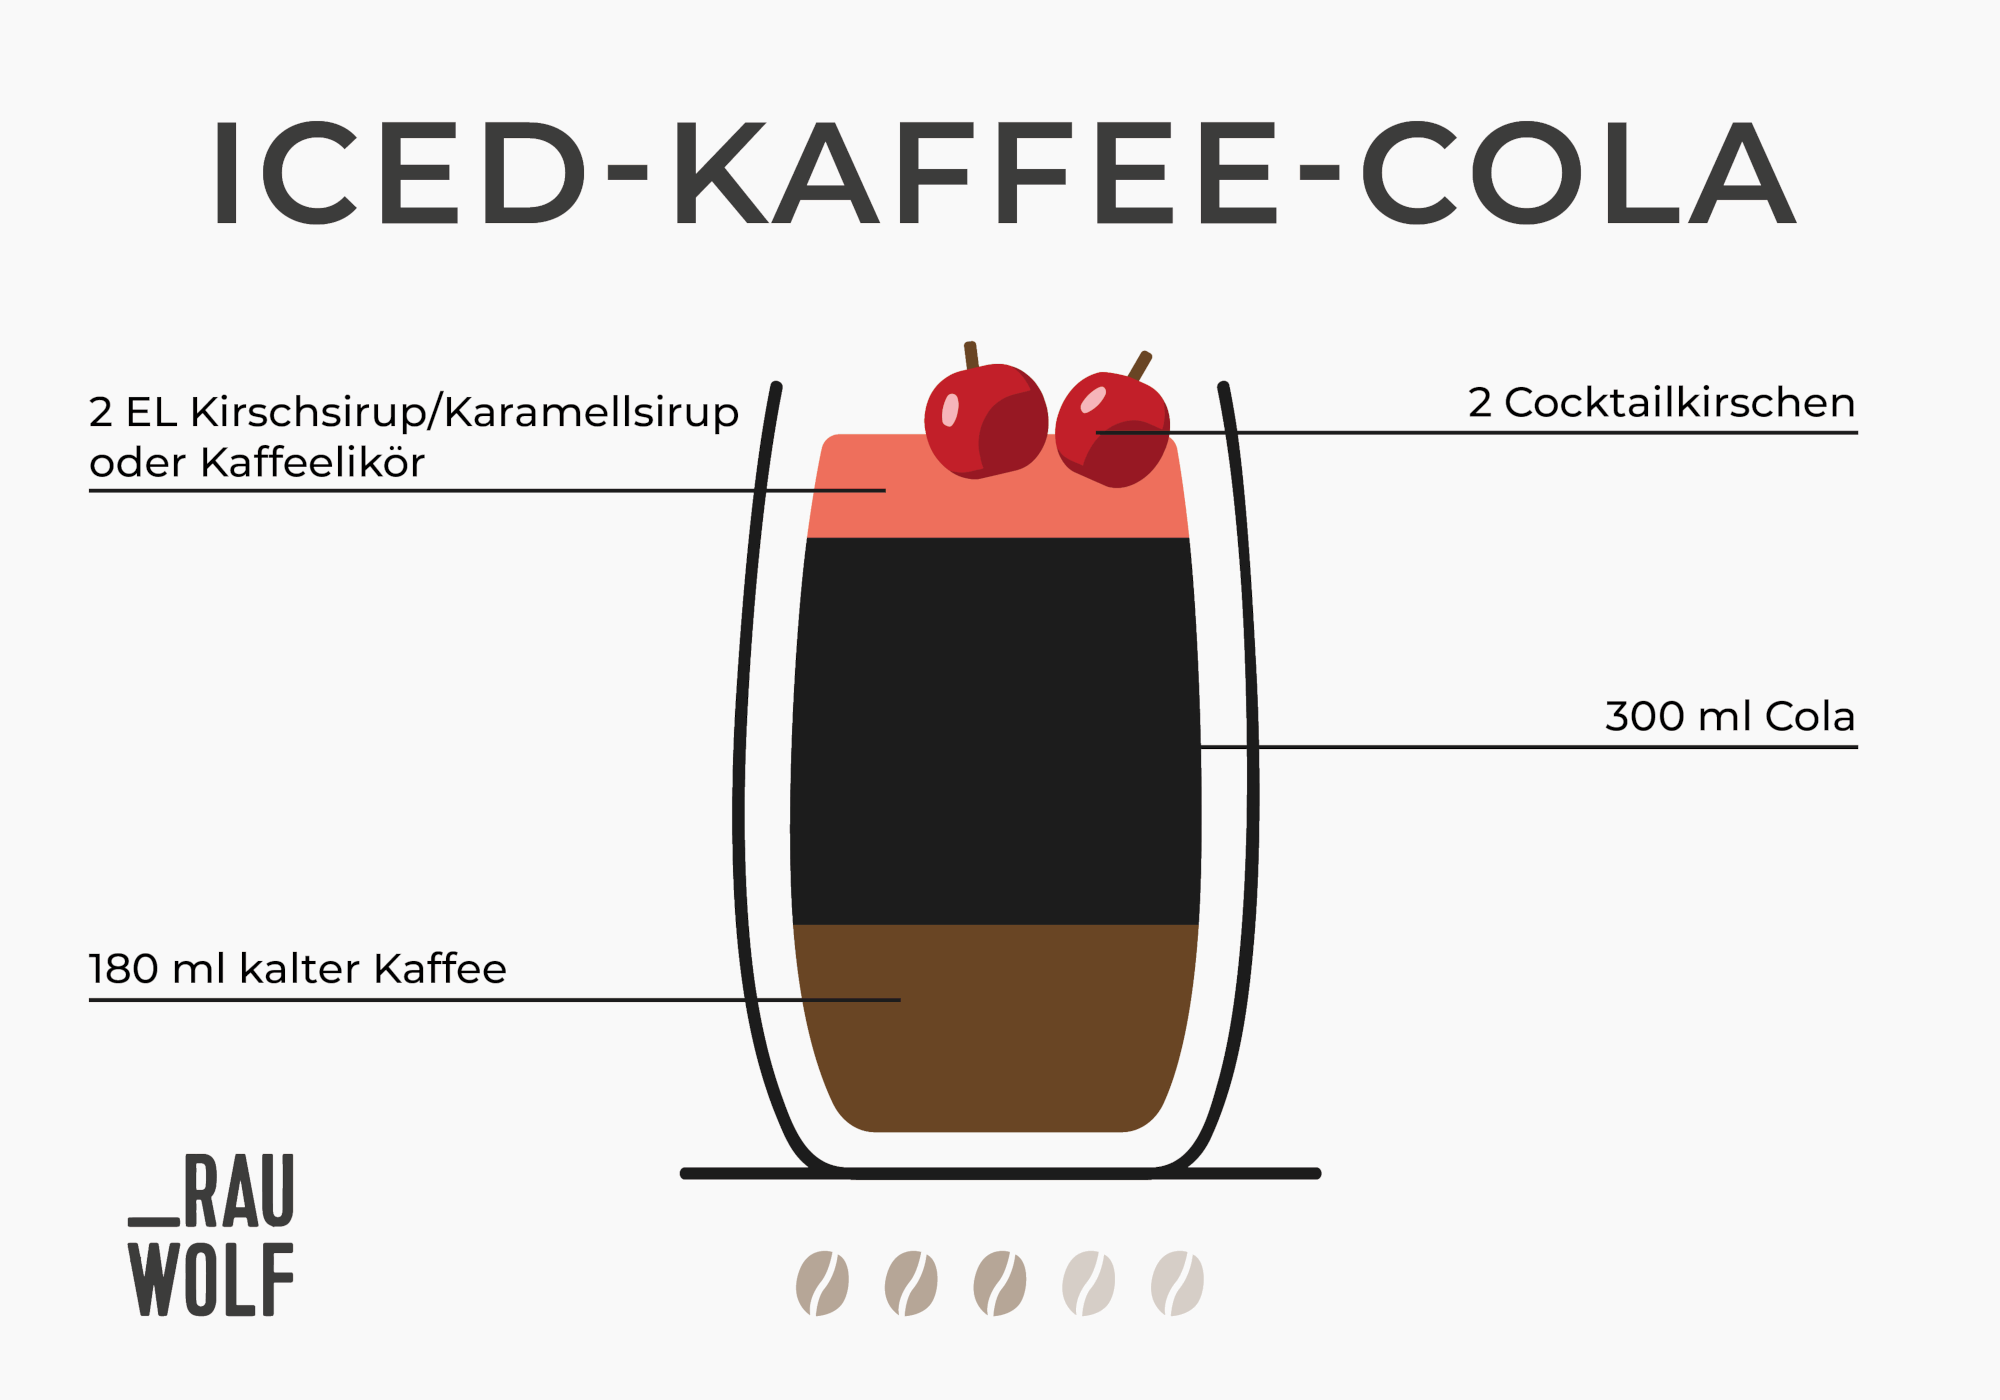 Kaffee-Trend Iced-Kaffee-Cola